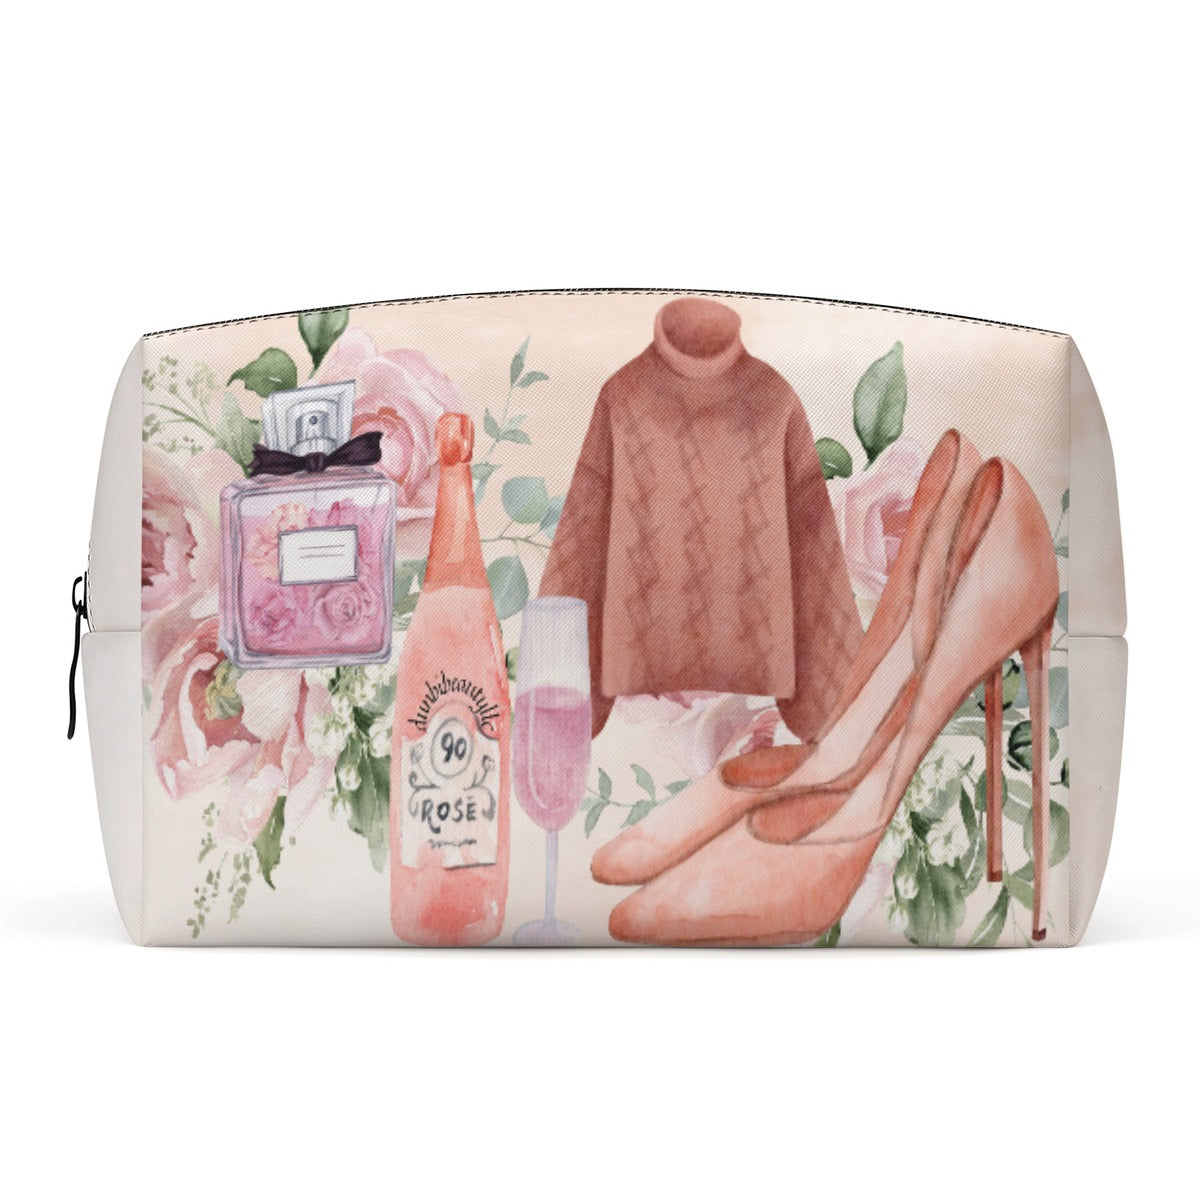 PU Cosmetic Bag  Dusty Rose, Pink, Perfume, High Heels Champagne & Roses, Aesthetic, Feminine, Fashion (Designed by Dunbi)